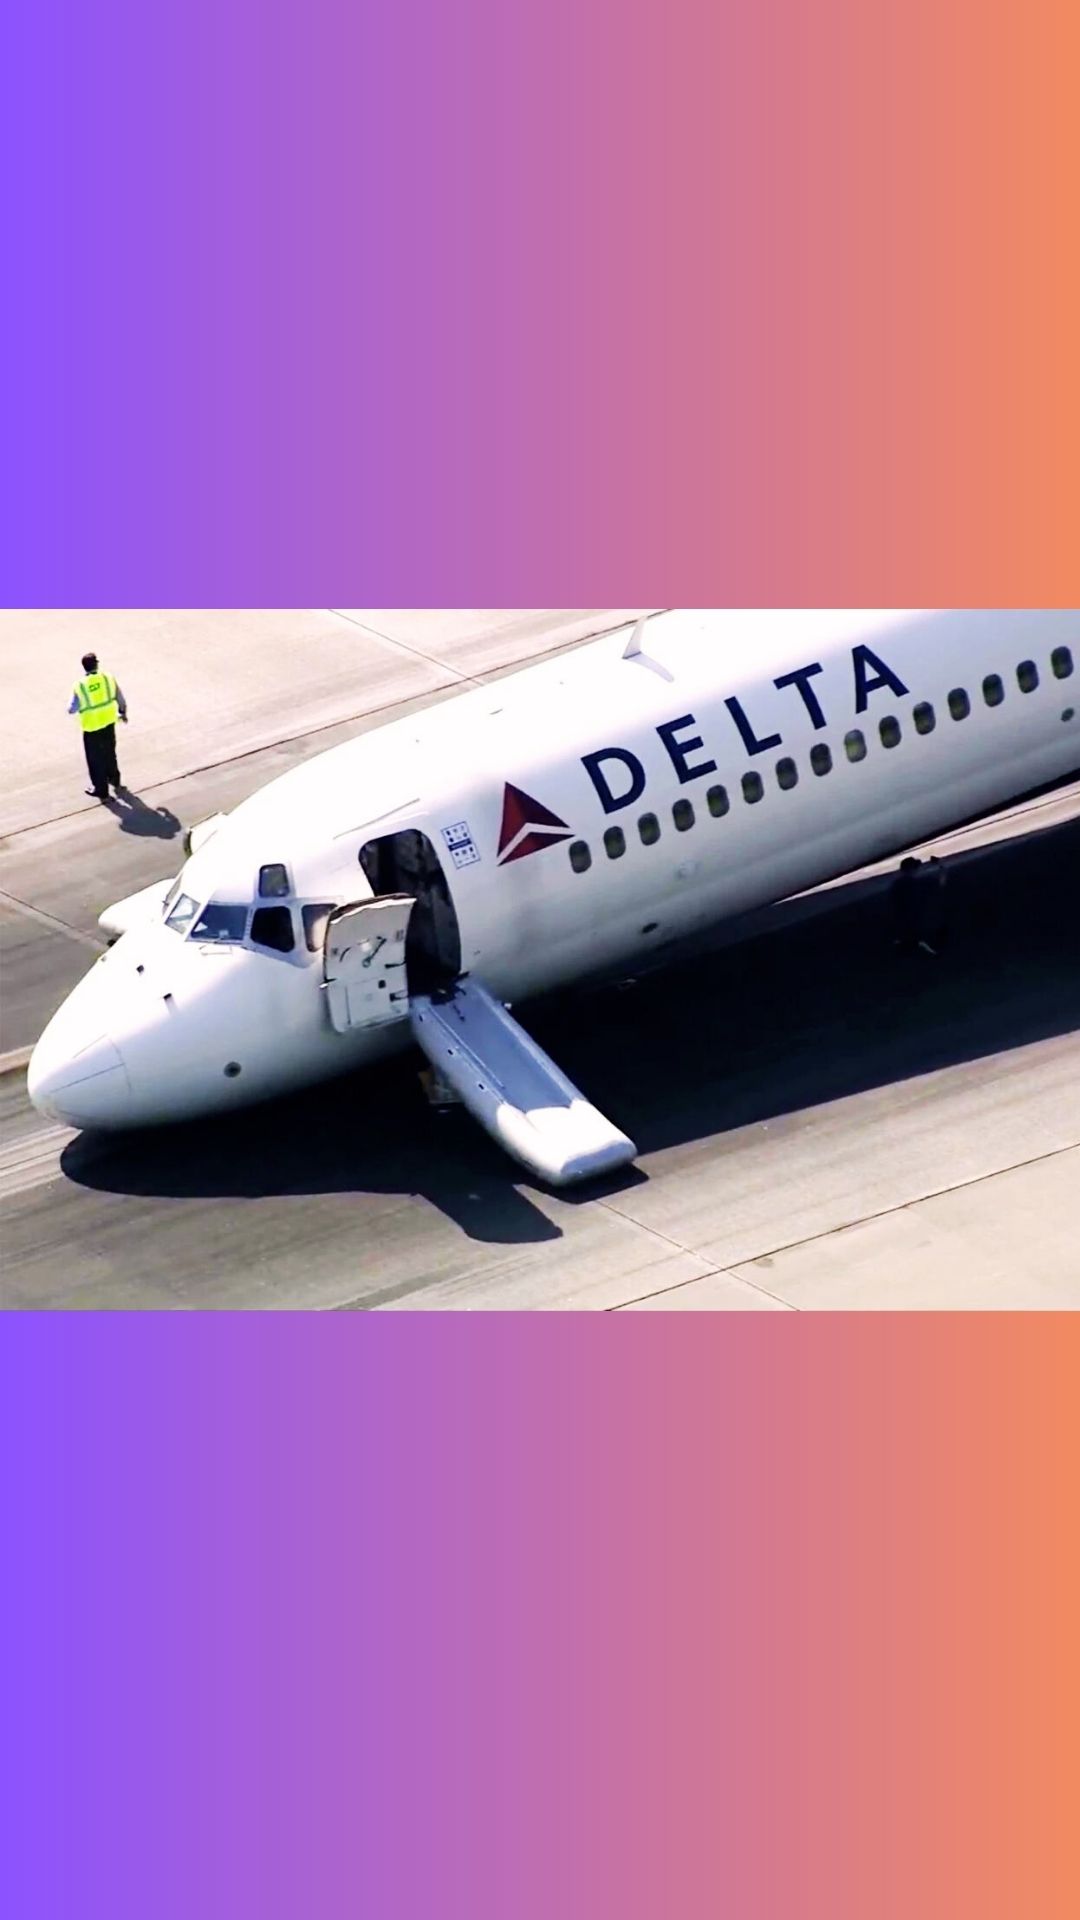 Delta flight pilots make 'unbelievable' landing at US airport